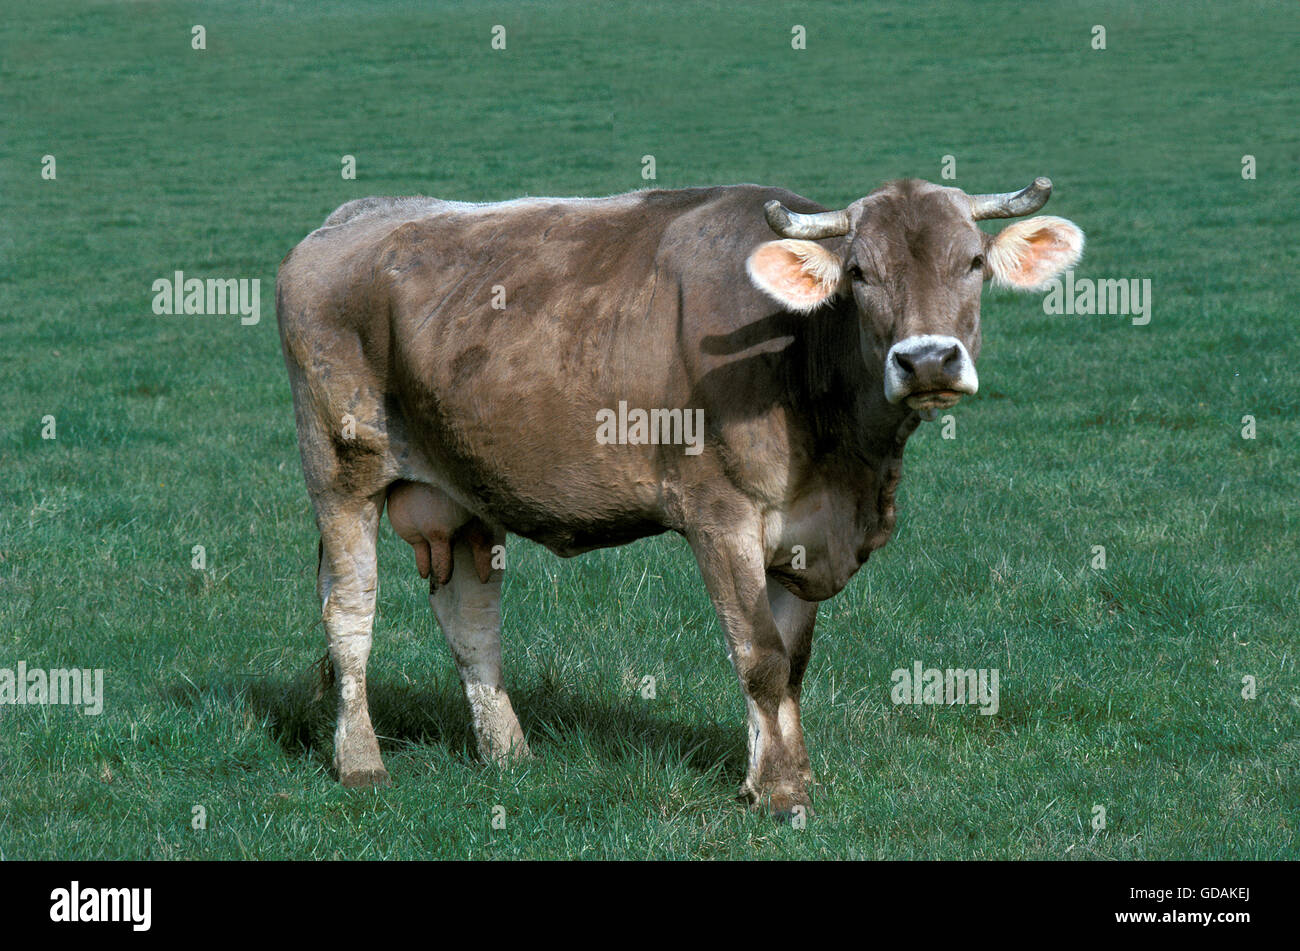 Brune des Alpes mucca, un francese di razza bovina Foto Stock